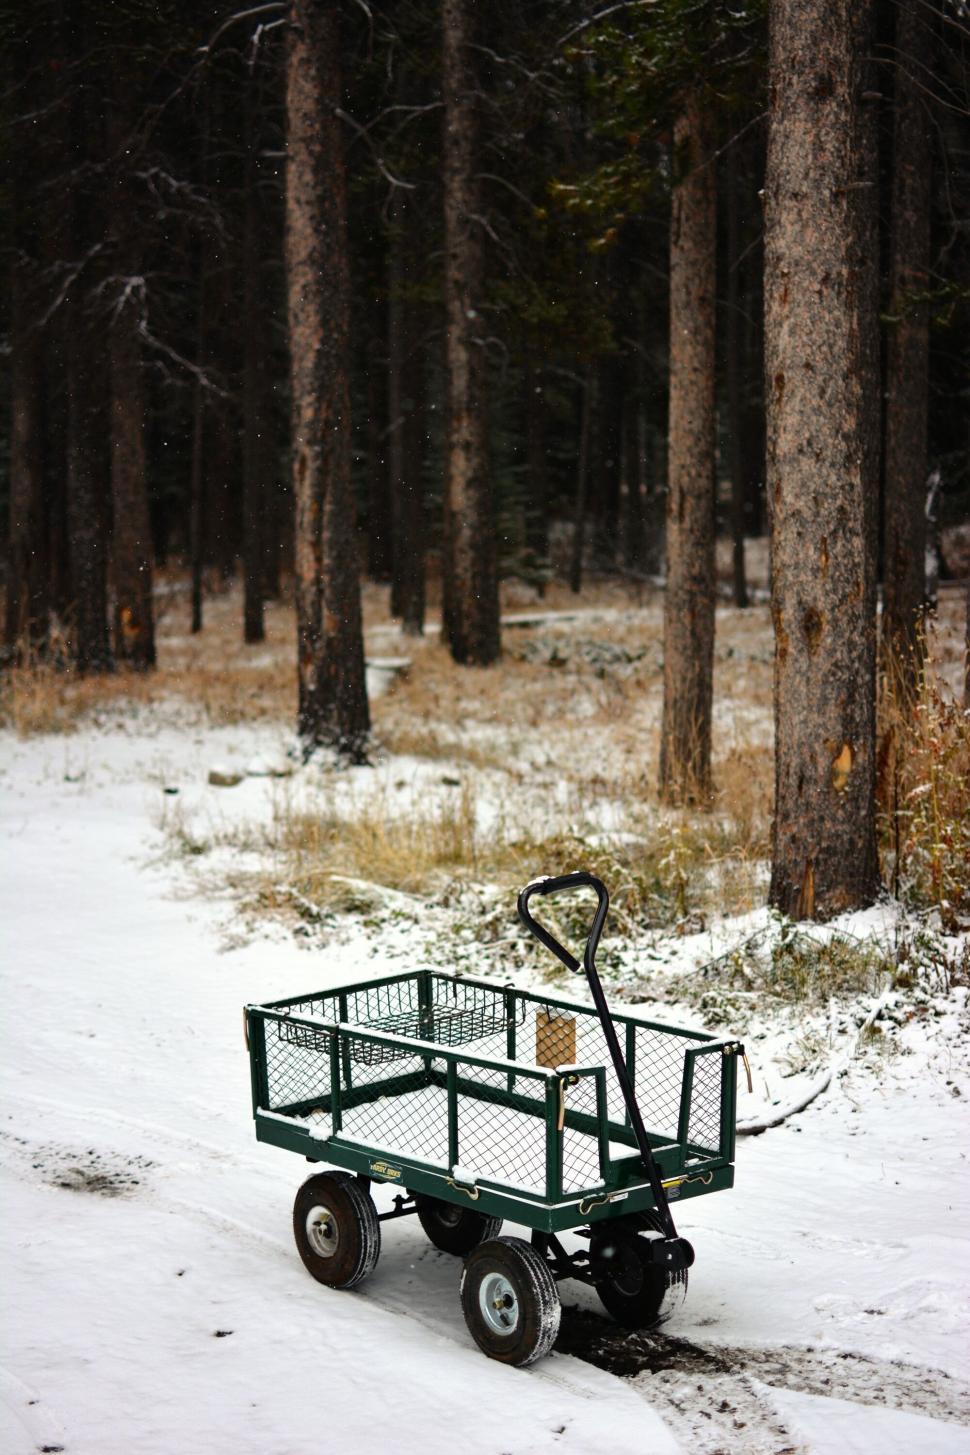 Free Image of Wagon on snow 